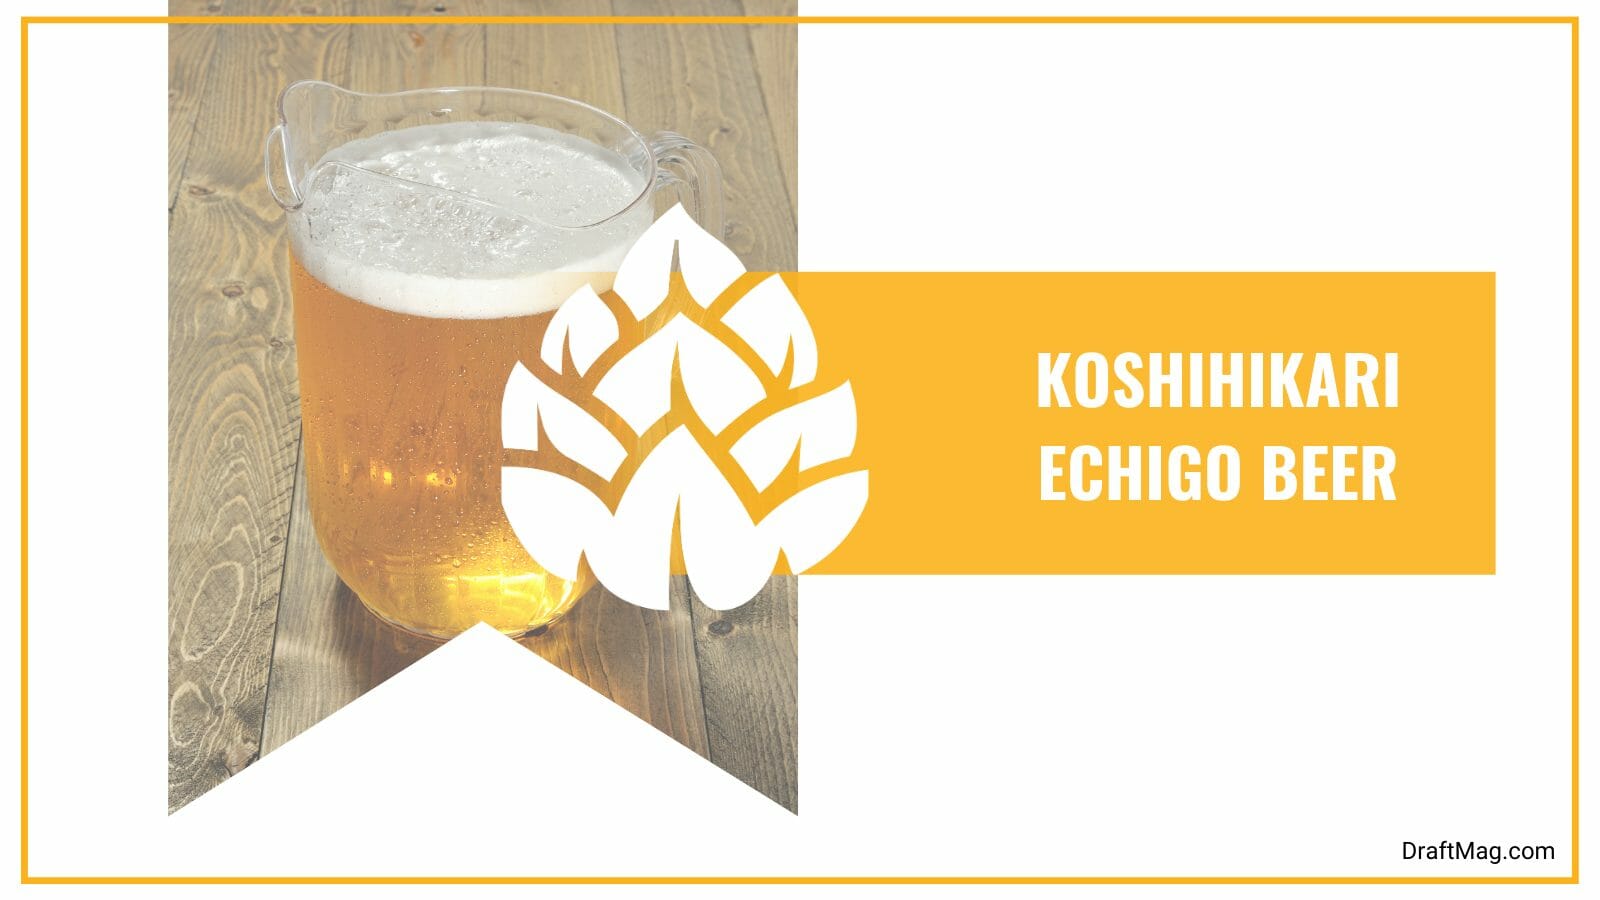 Koshihikari echigo beer